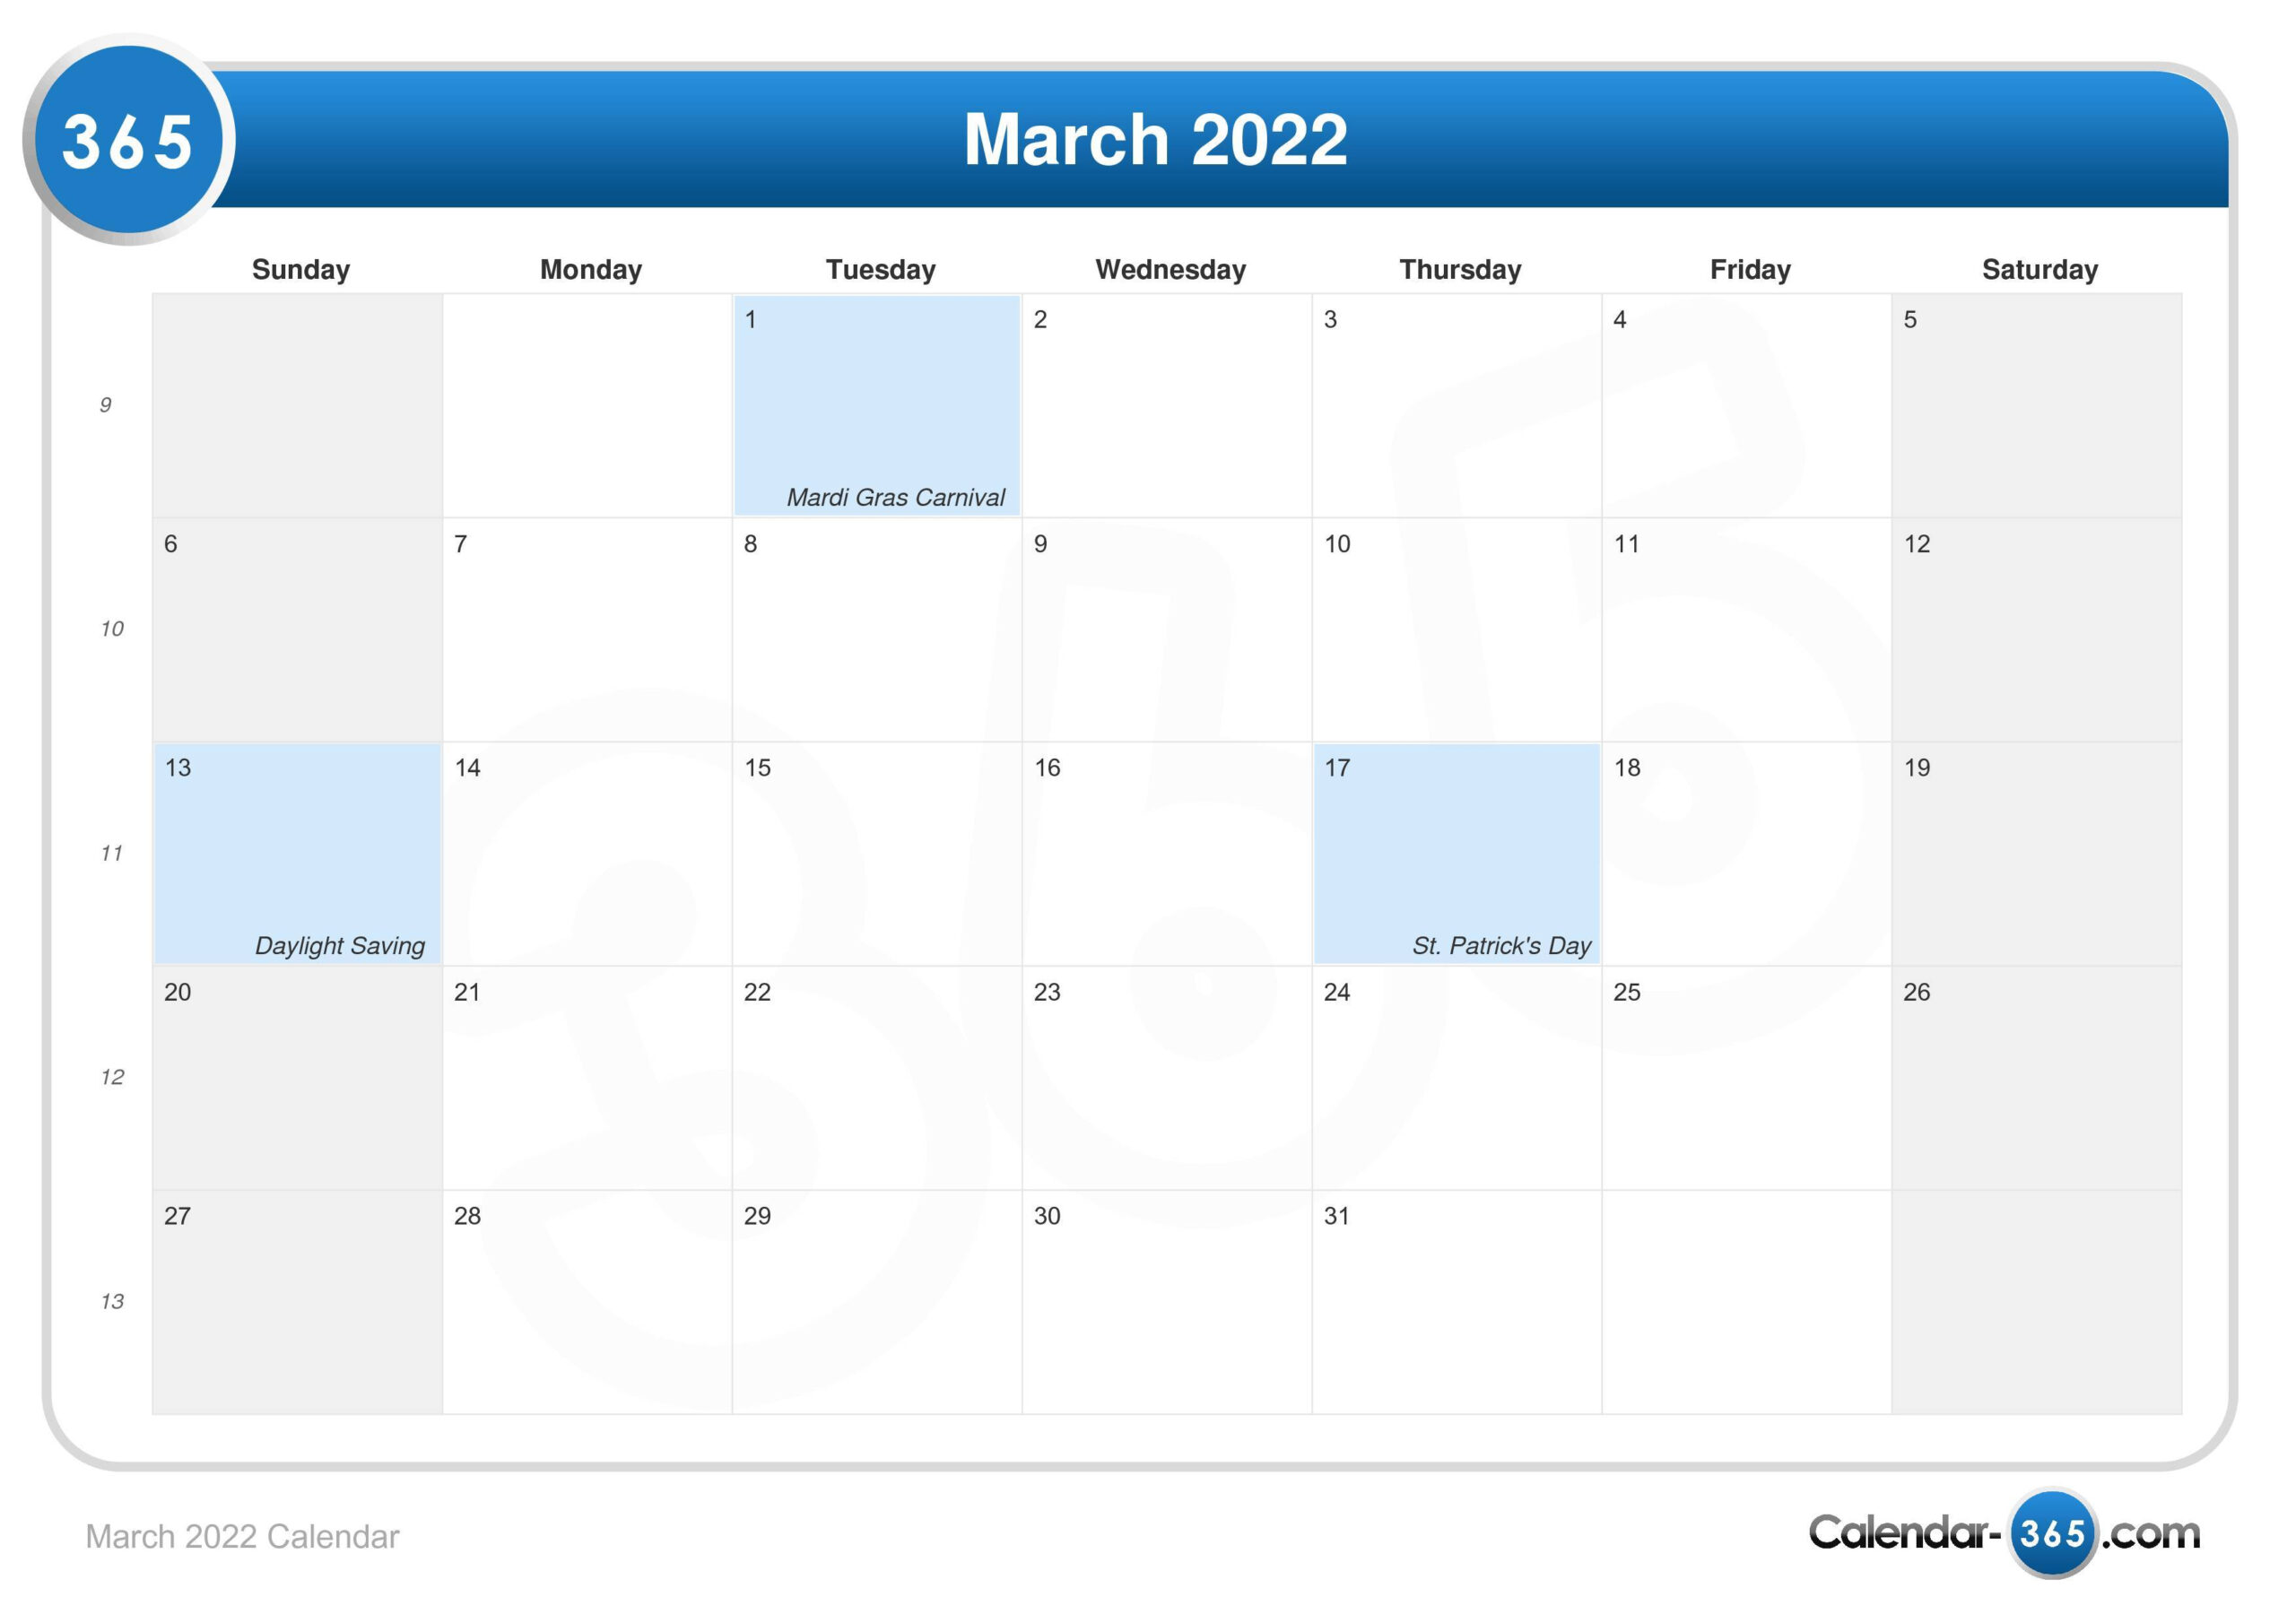 Get 2022 Calendar For March